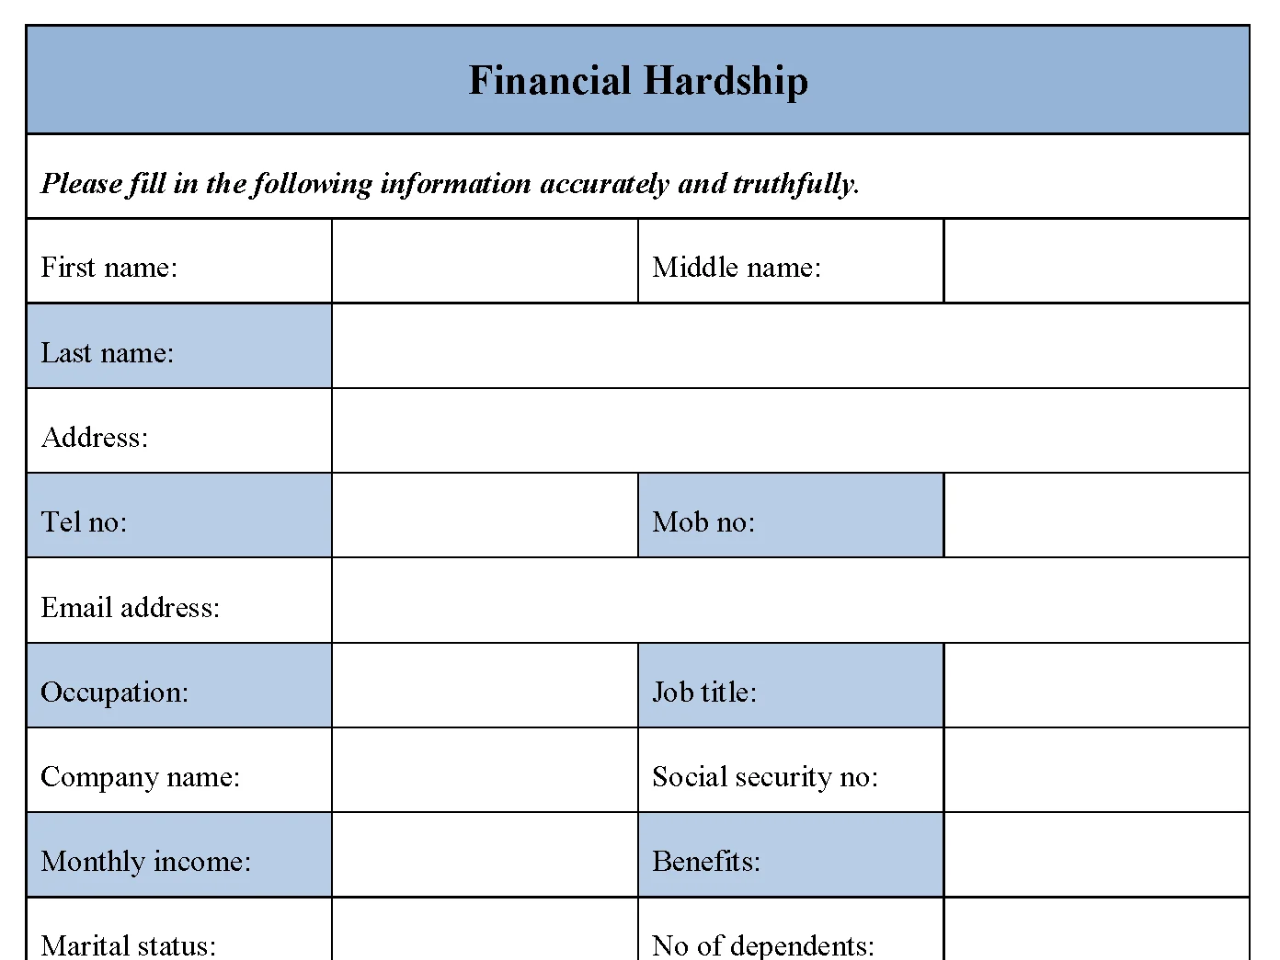 Financial Hardship Form